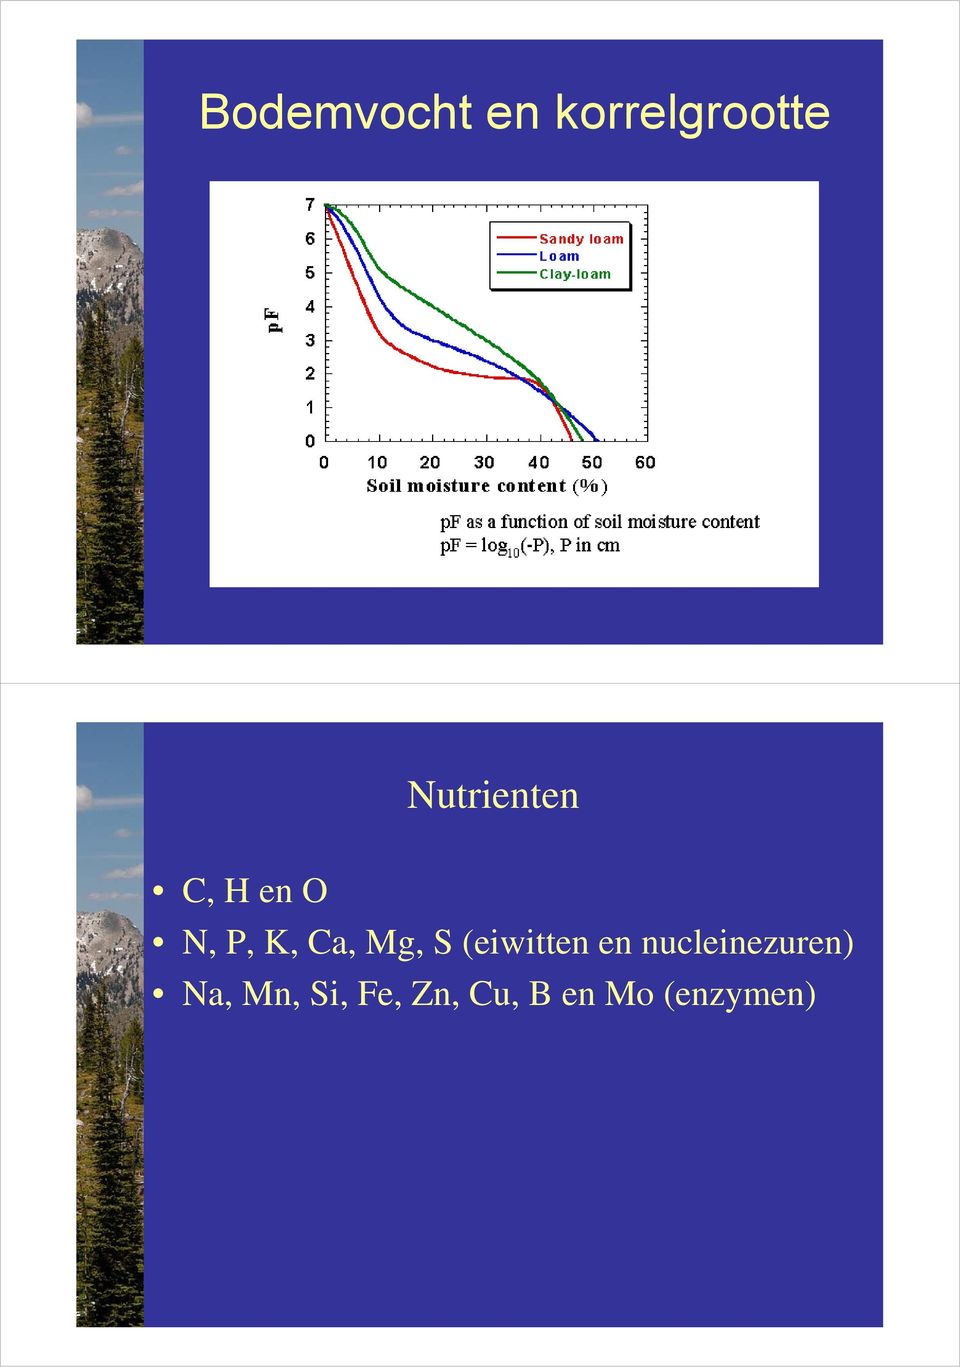 Mg, S (eiwitten en nucleinezuren)